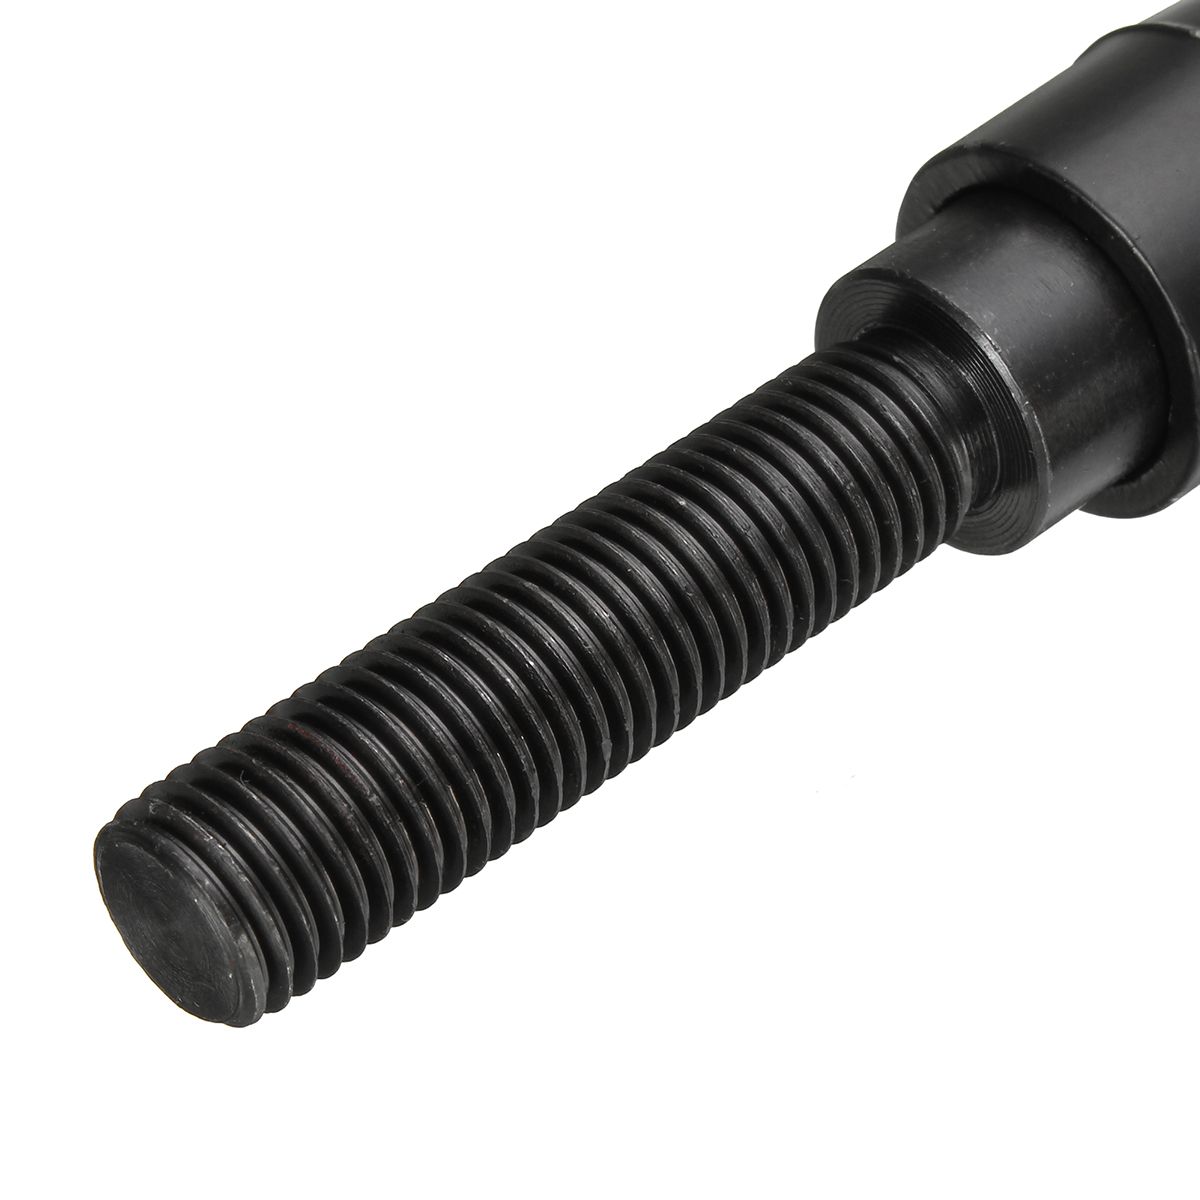 Zinc-Alloy-M16-32-70mm-Male-Thread-Adjustable-Clamp-Handle-Tool-1115007